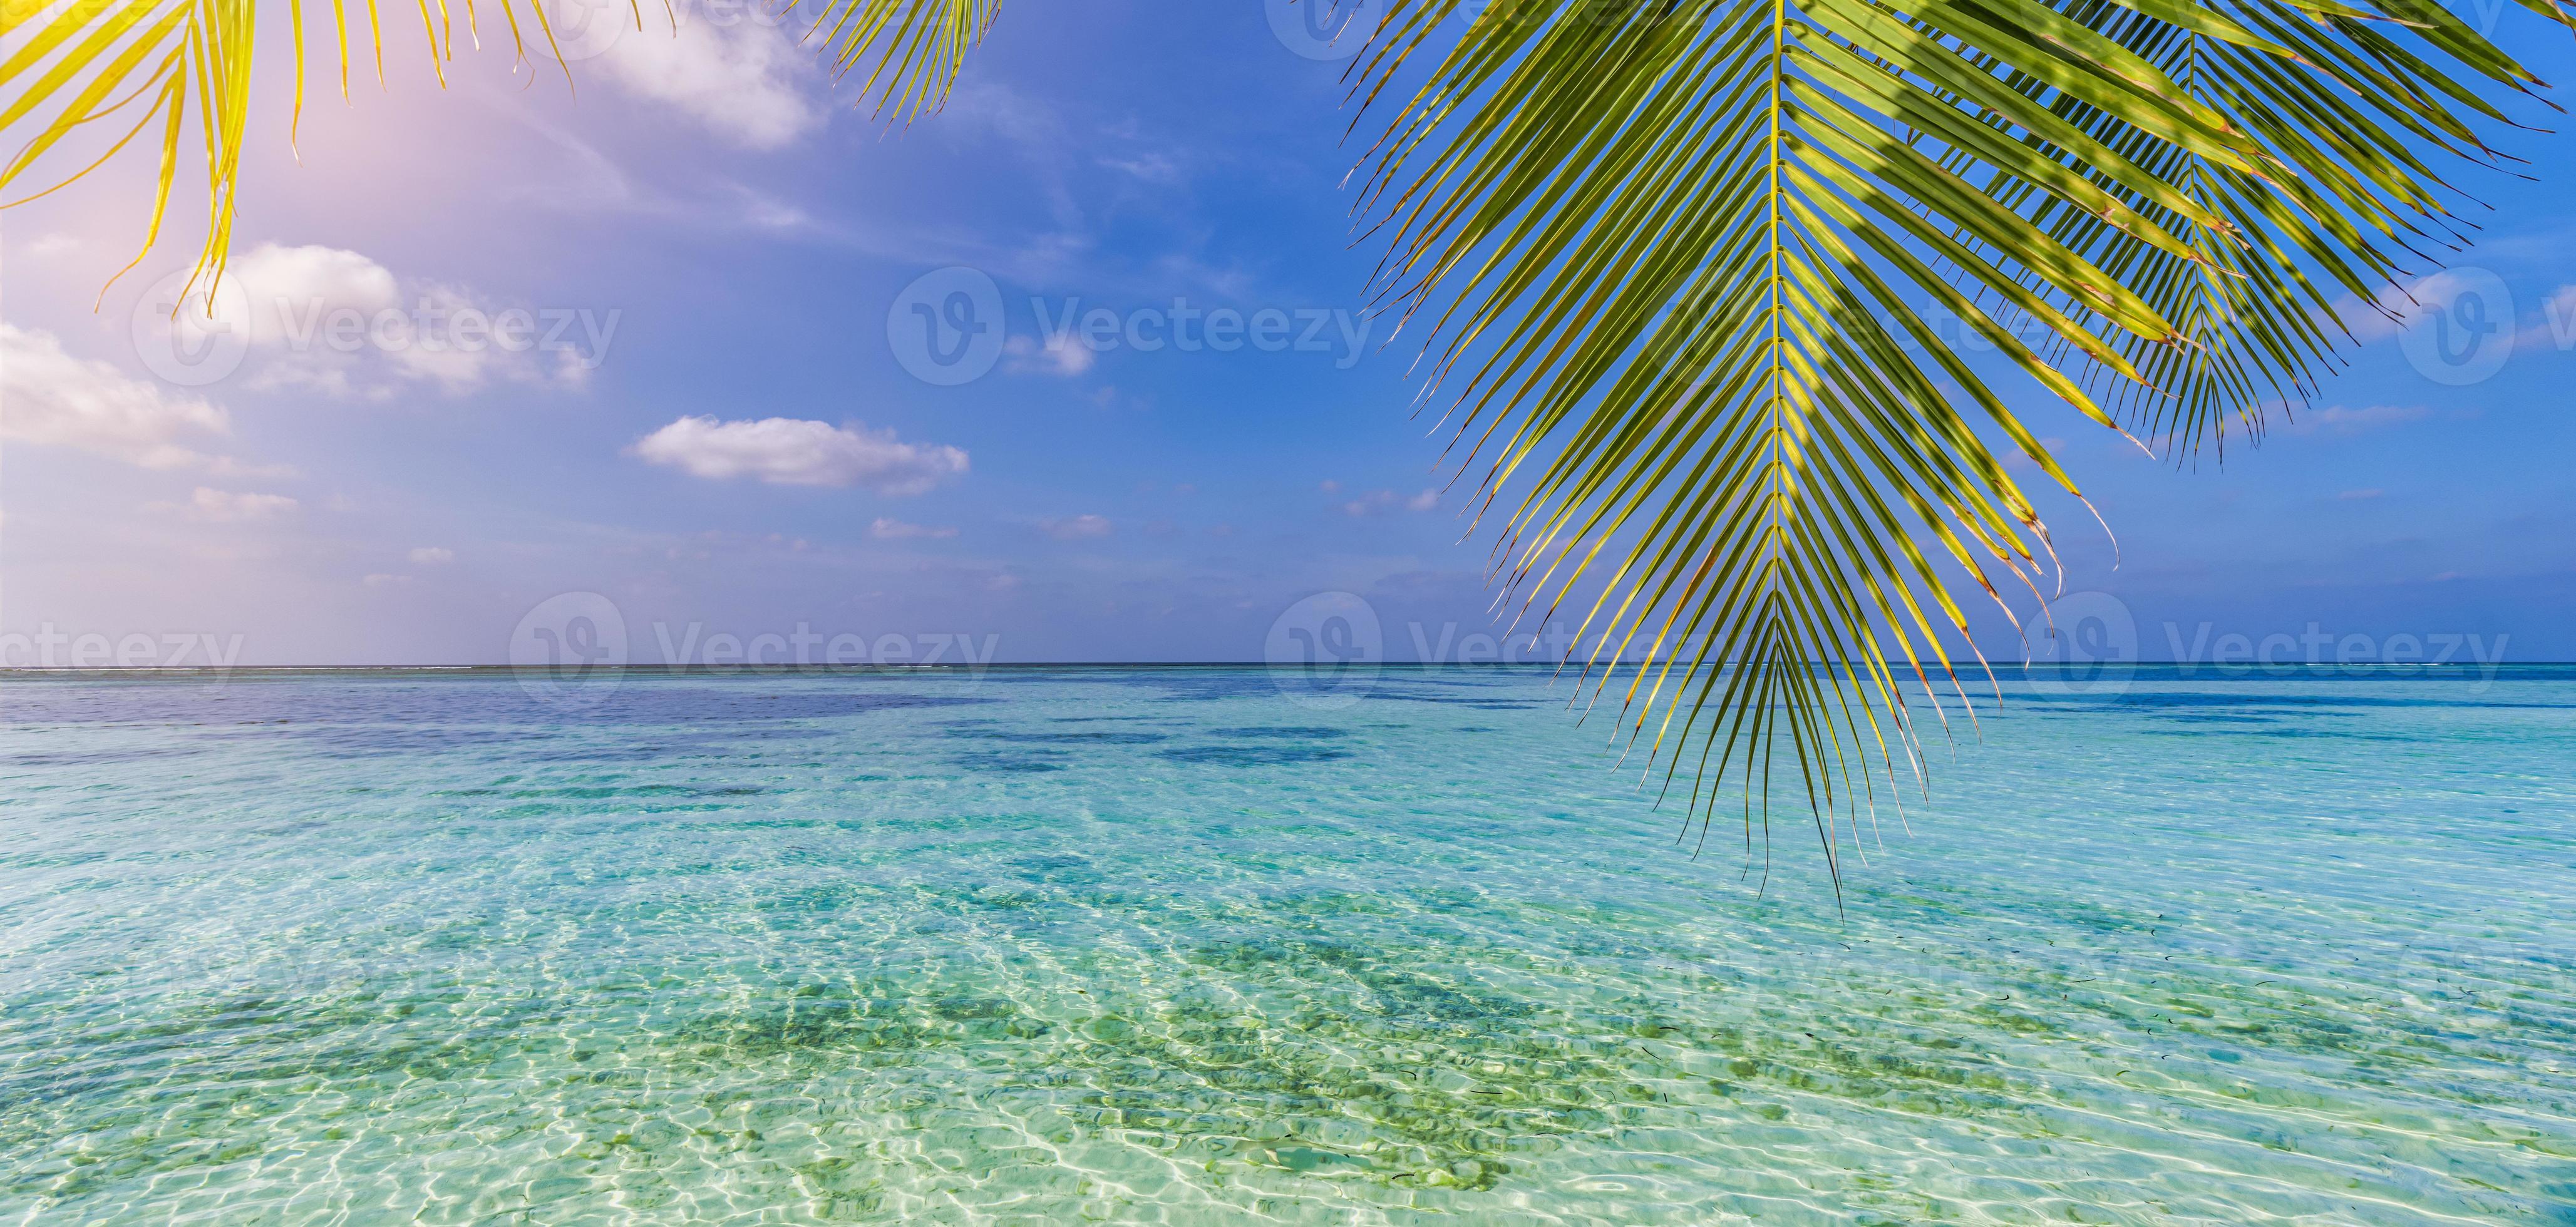 Buy Avezano 2.1x1.5m Tropical Beach Background,Palm Leaves Ocean